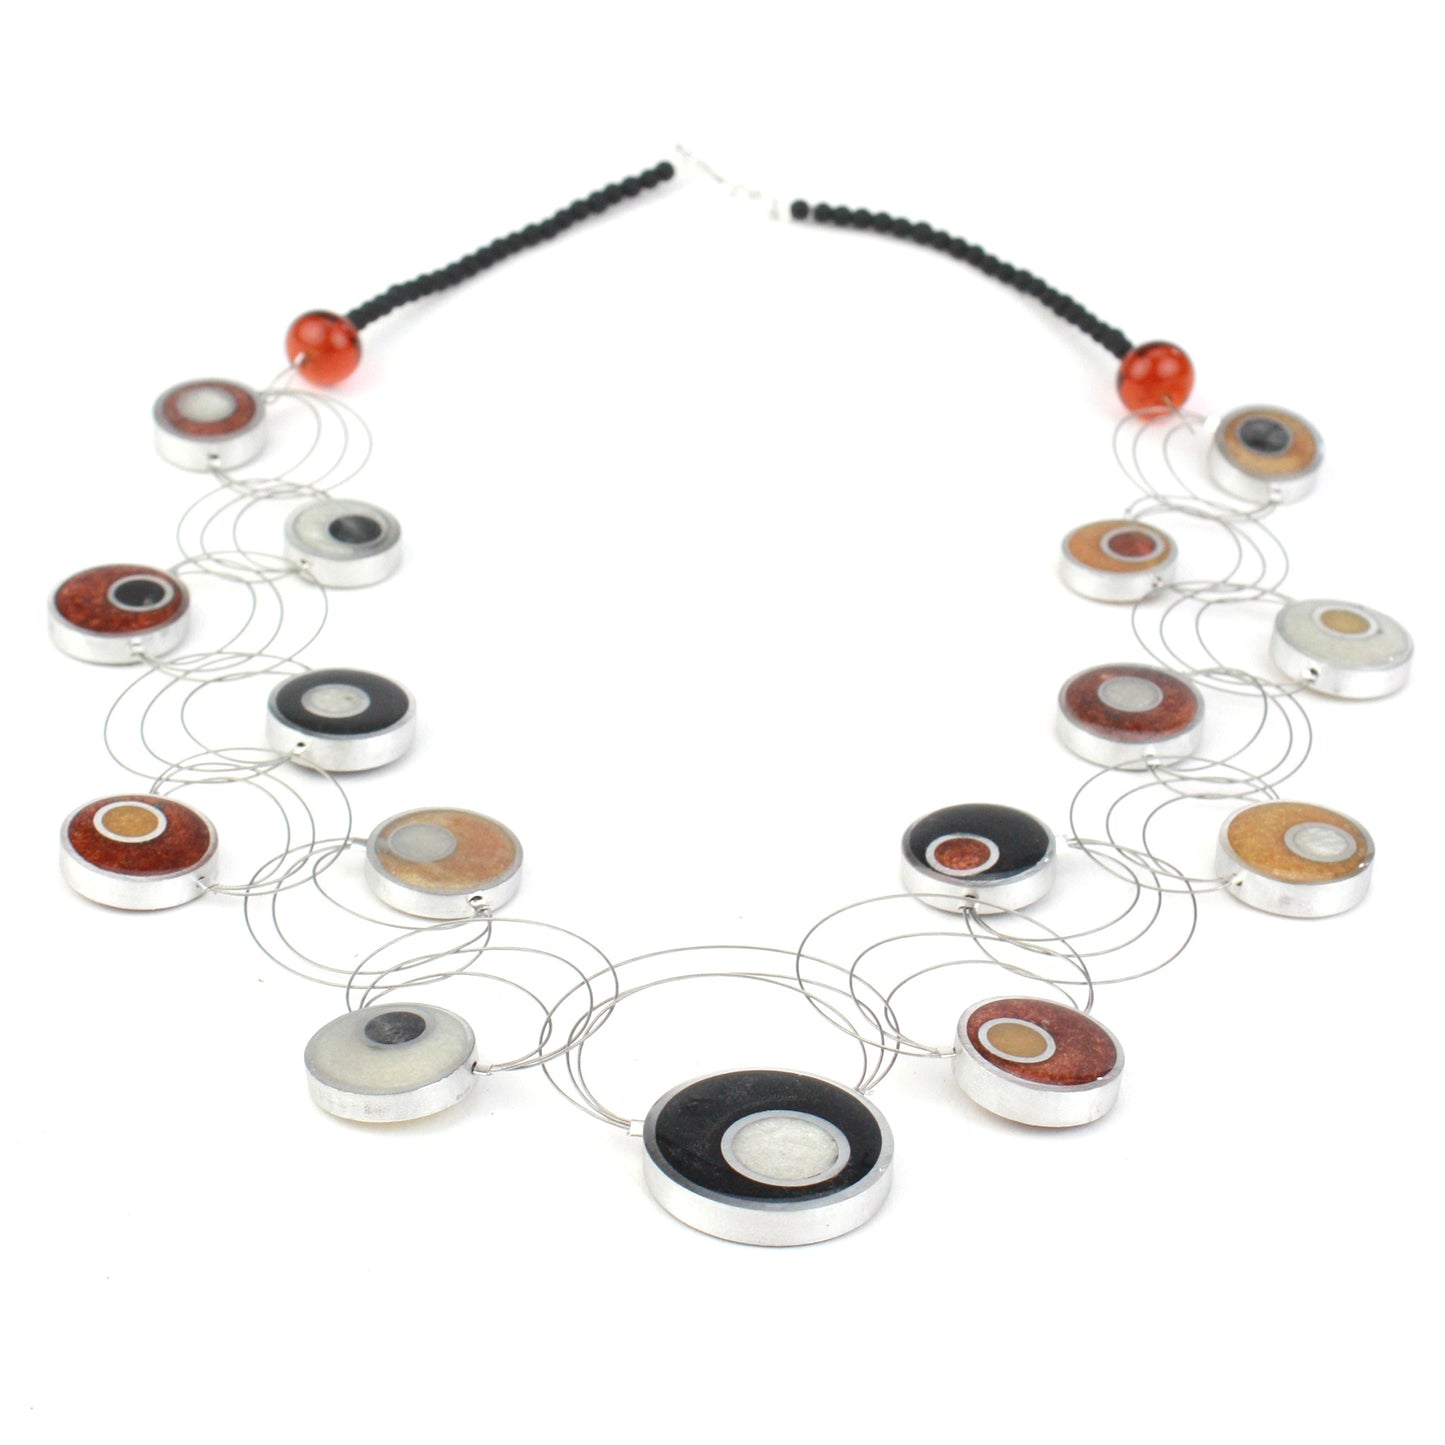 Resinique interlocking circles necklace - Black, white, copper and gold